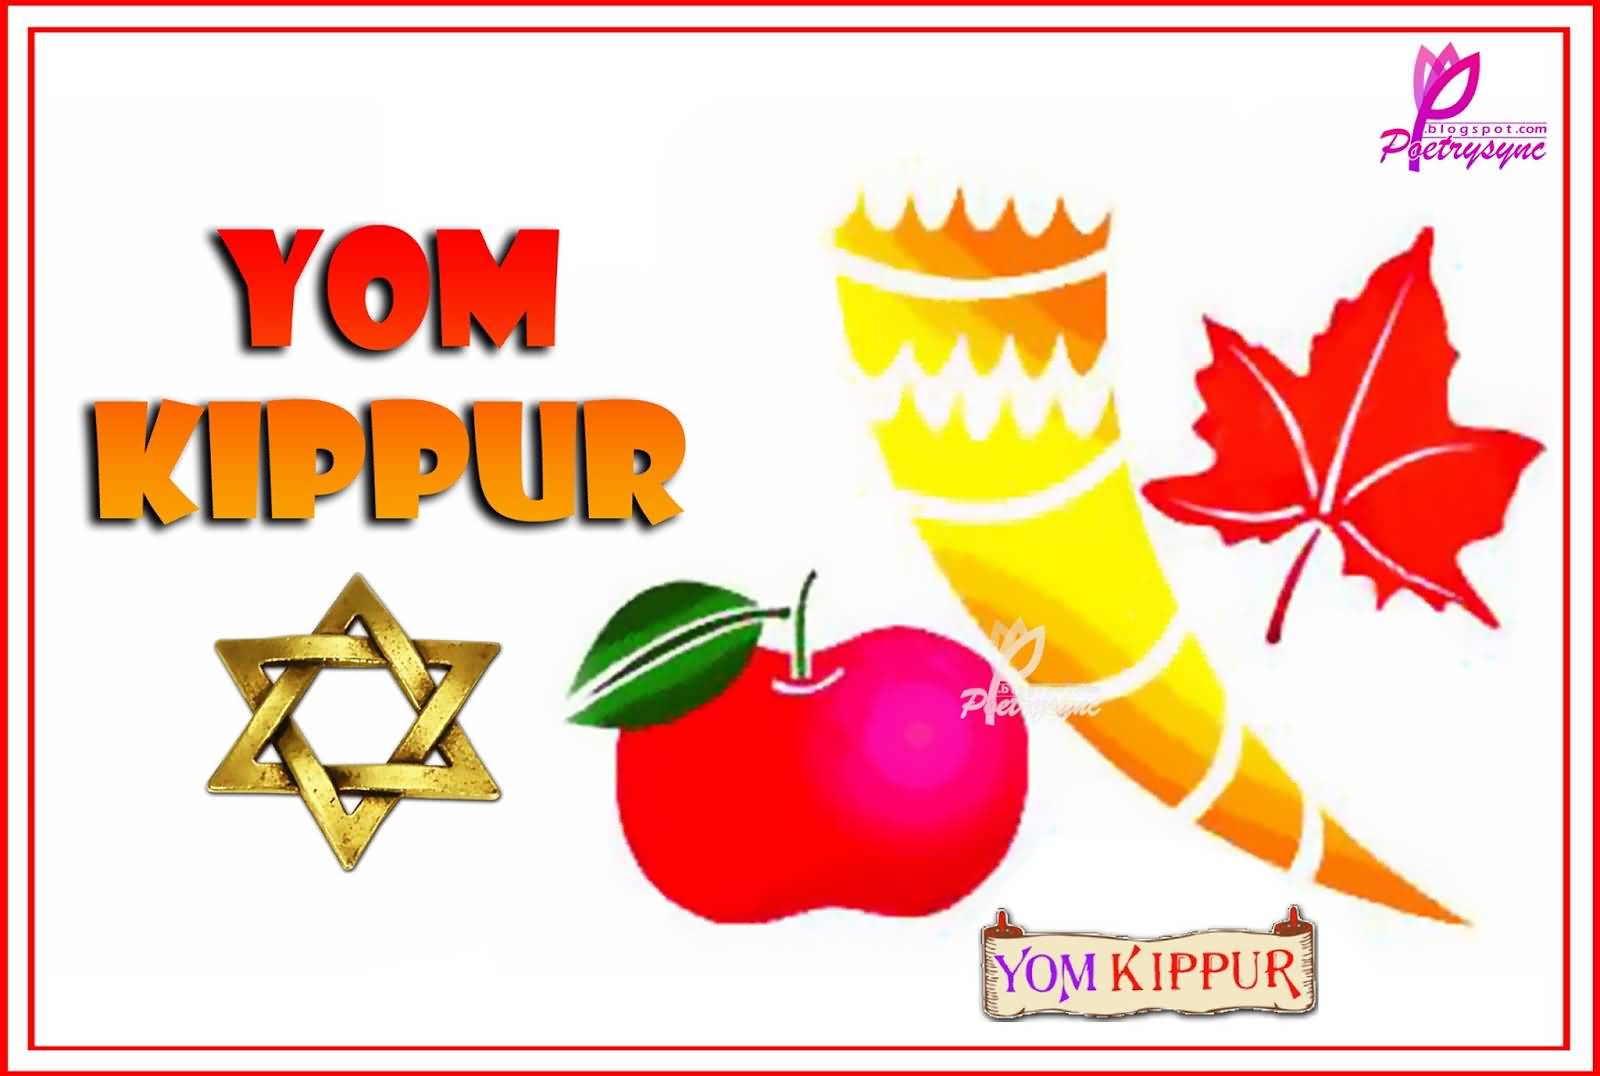 Yom Kippur Greeting Card Image